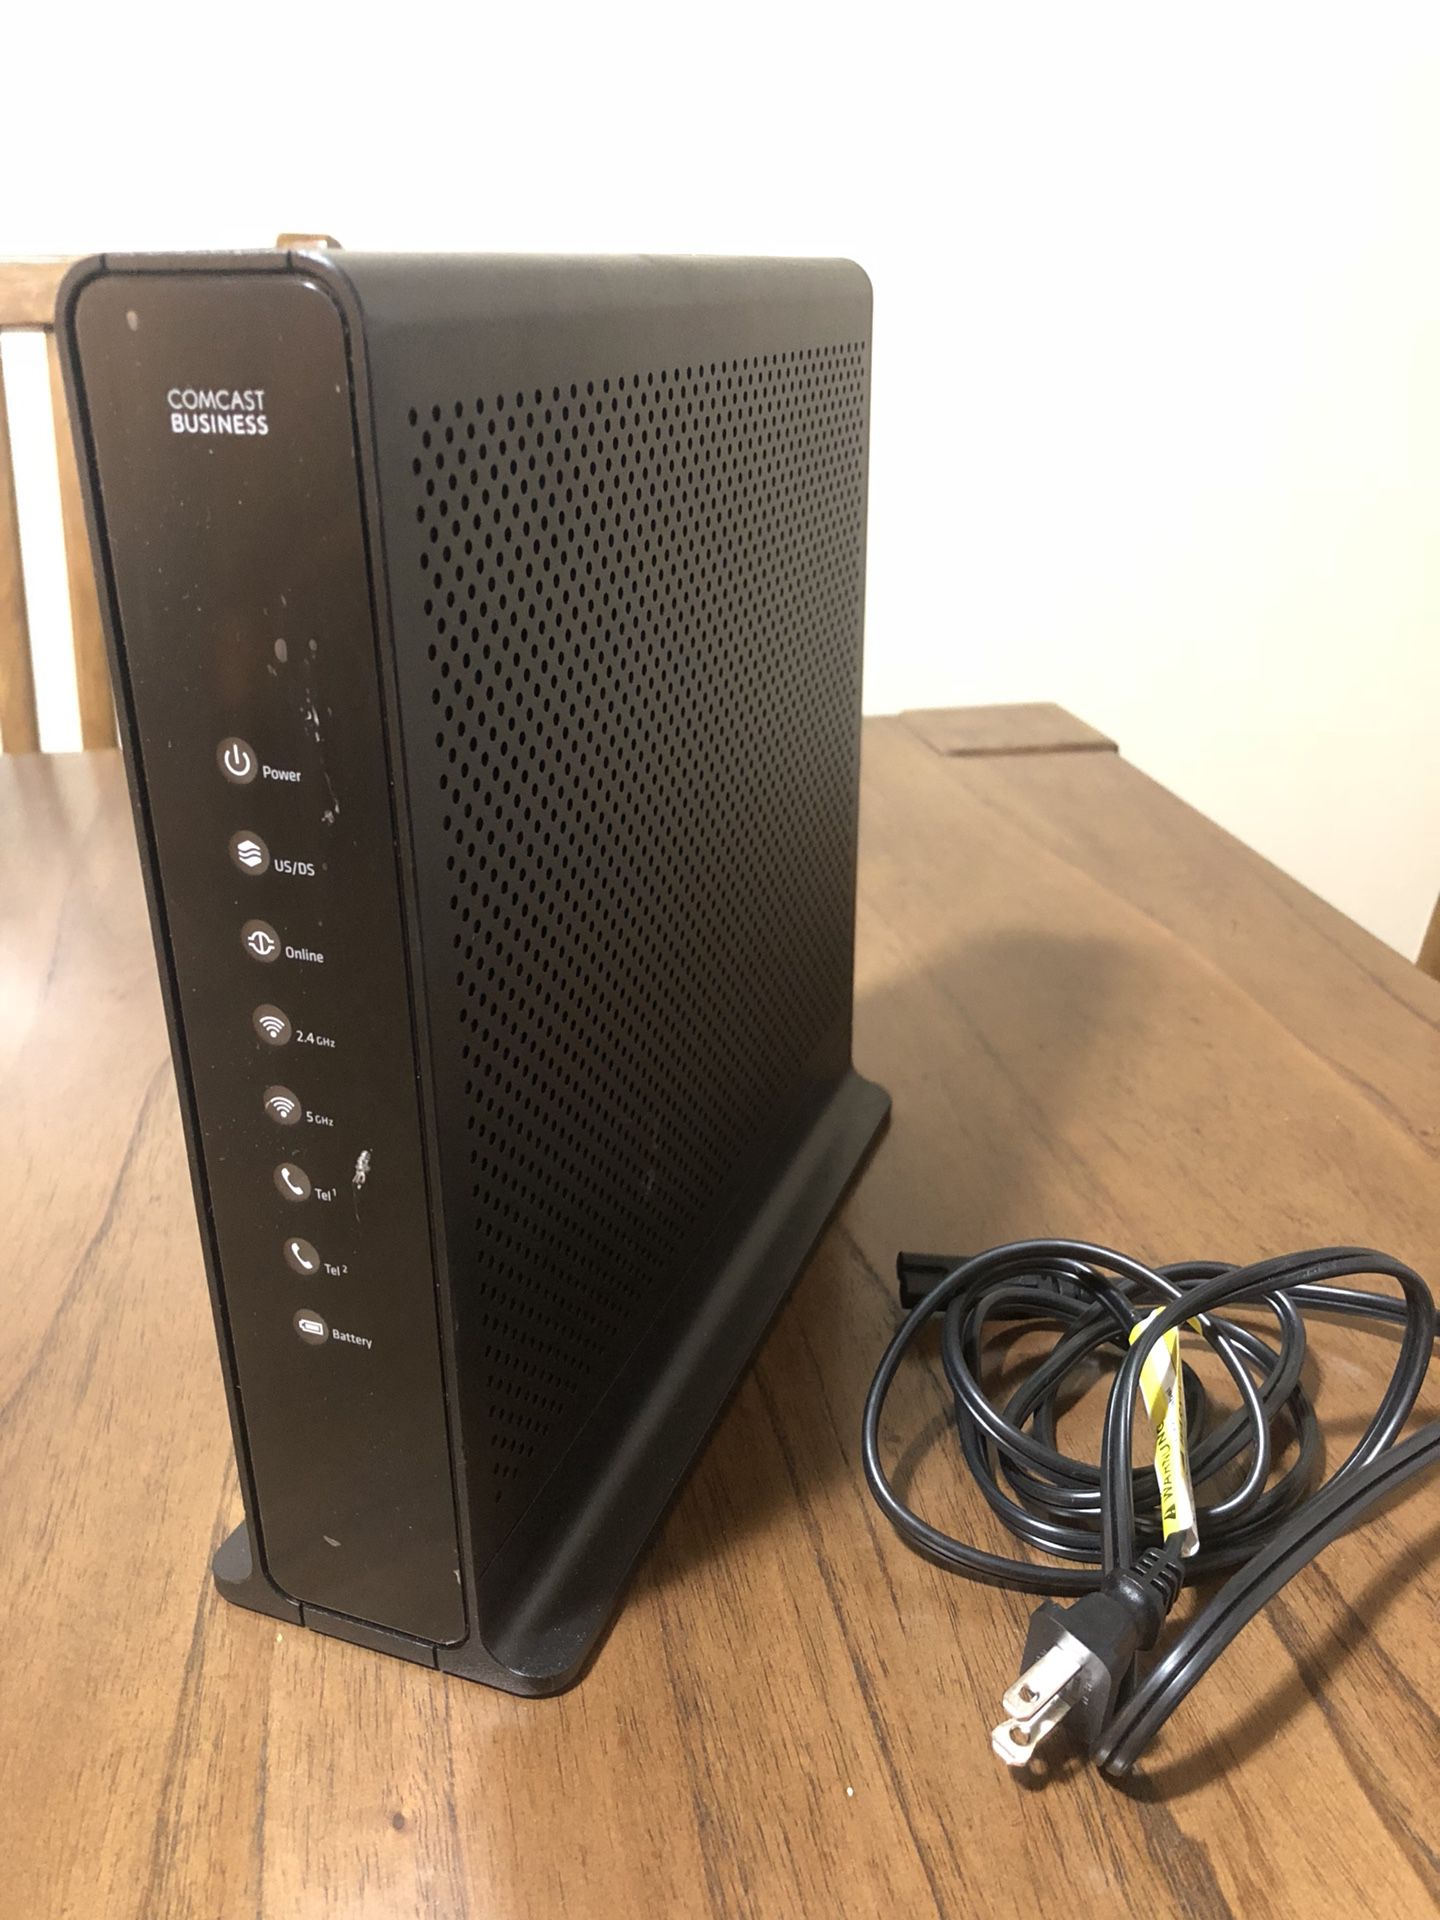 Cisco Comcast Business Router